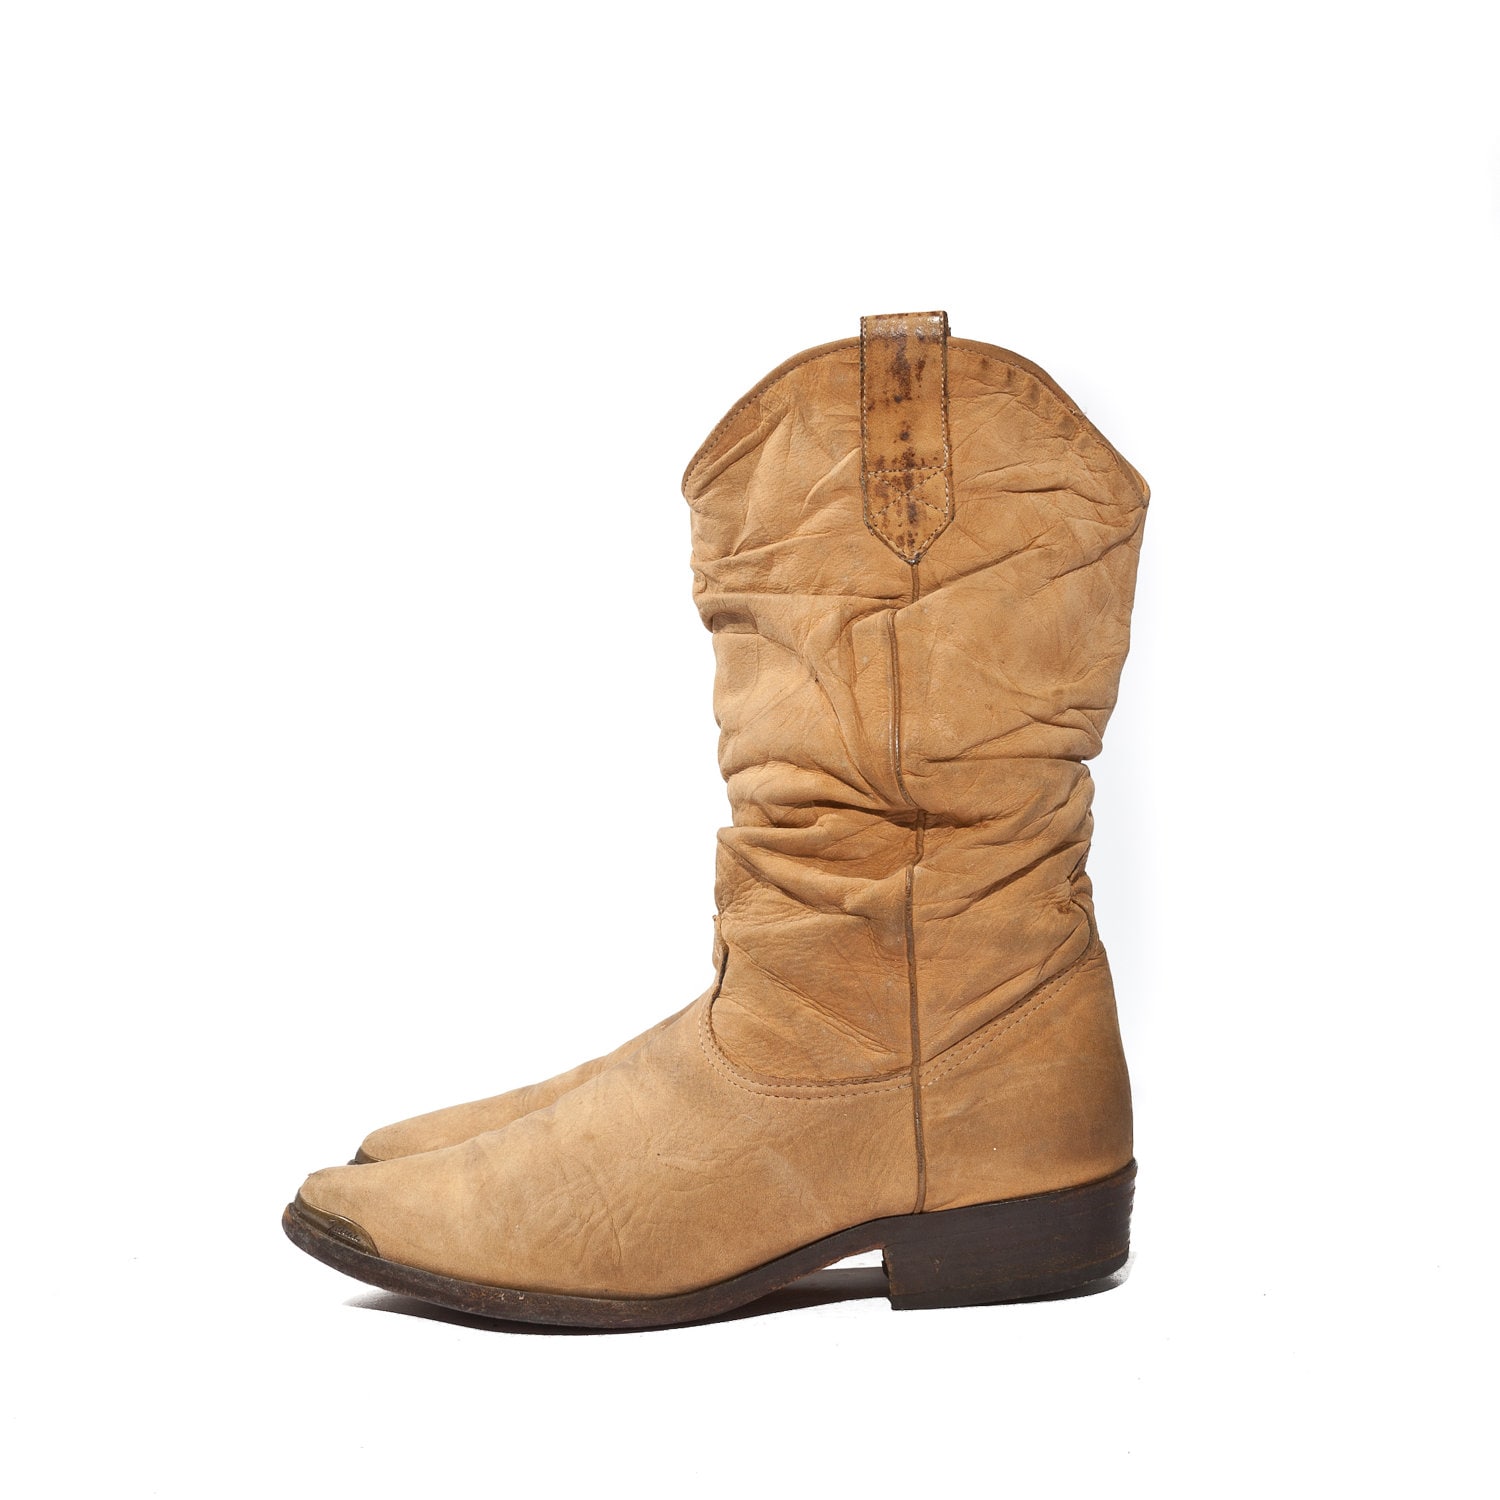 Men's Western Cowboy Boots by Zodiac USA in Tan Slouch